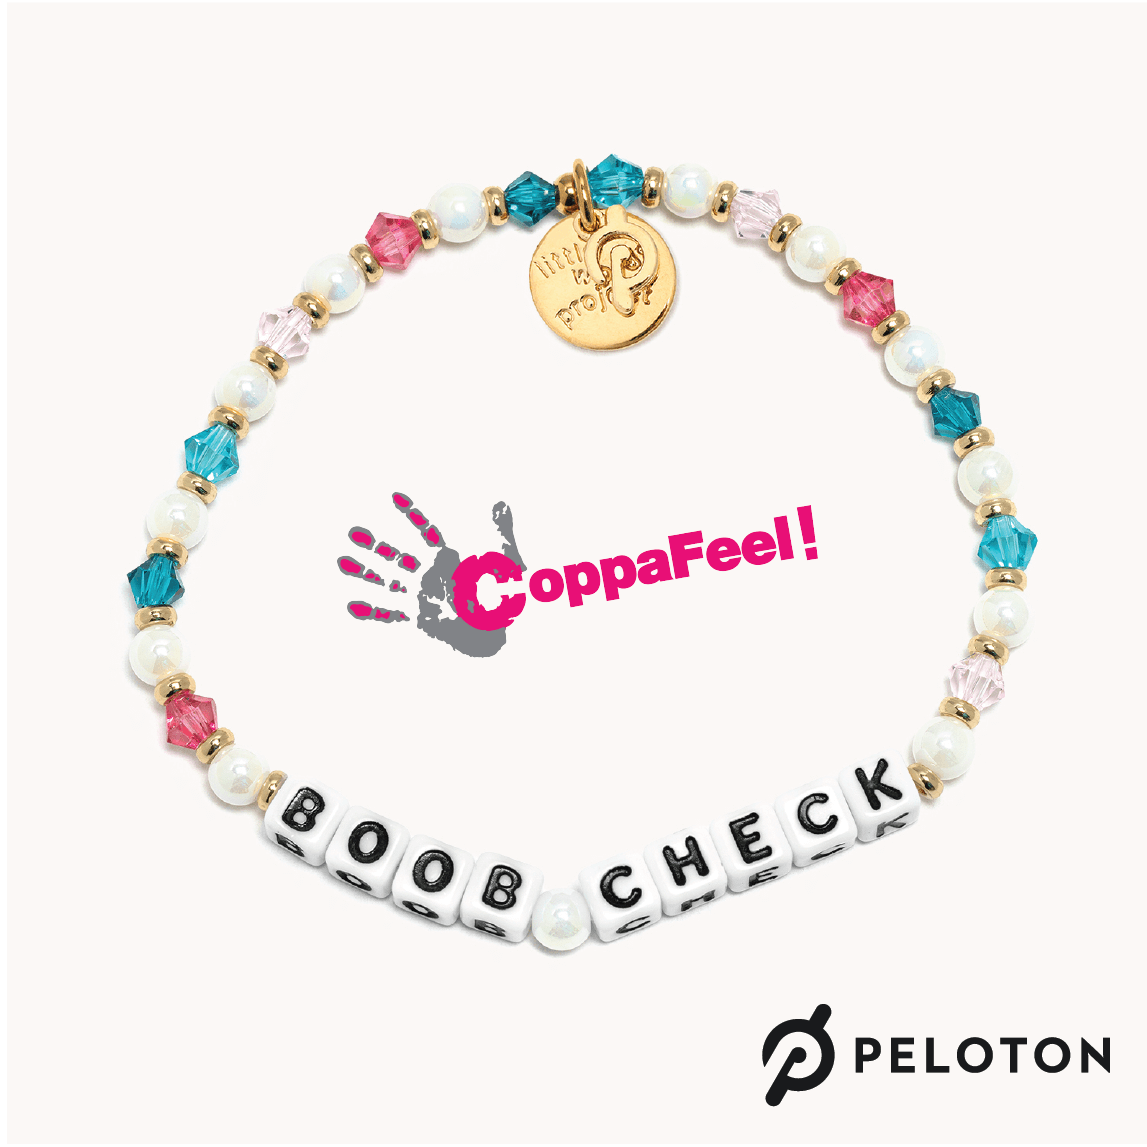 Boob Check- Peloton x LWP Bracelet